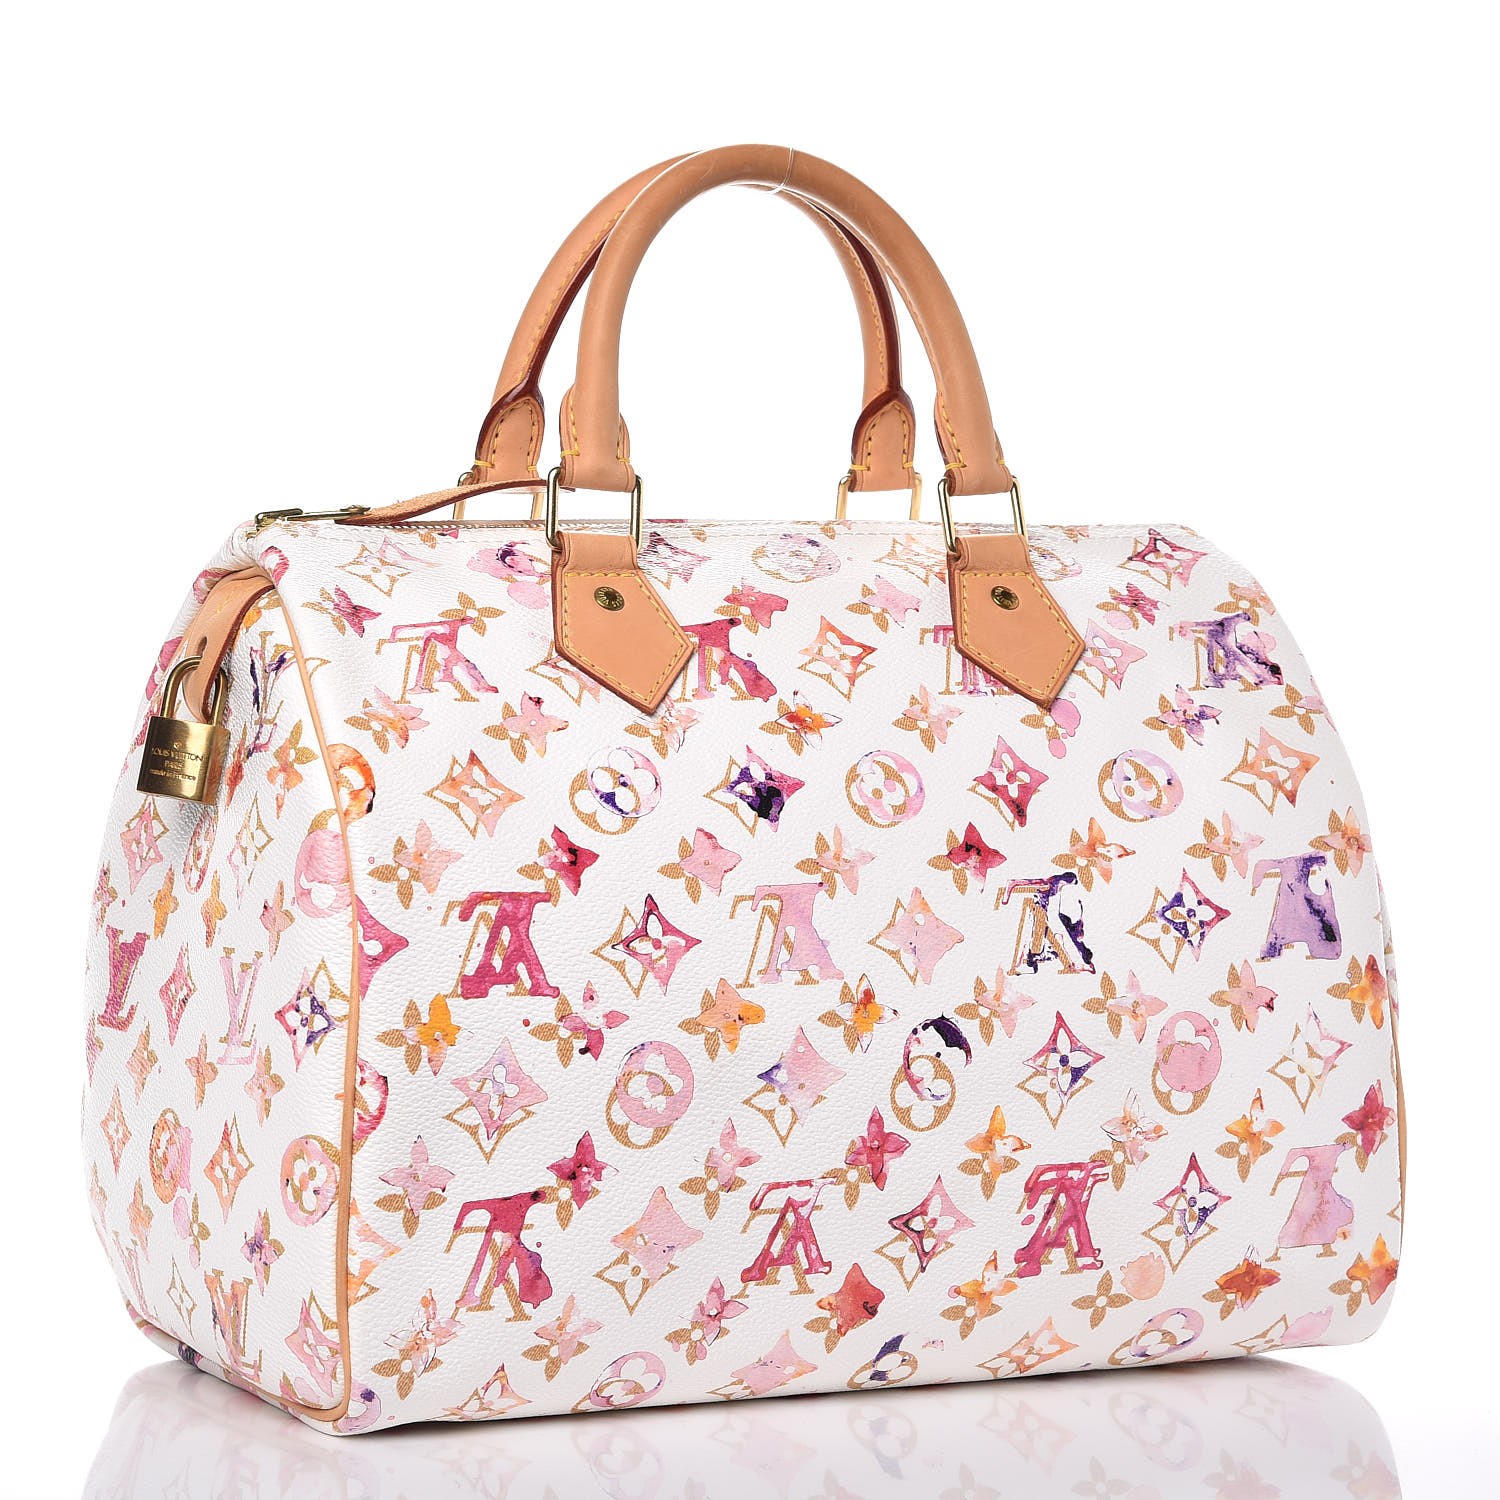 Louis Vuitton Stephen Sprouse Speedy 30 Graffiti Handbag in Box at 1stDibs